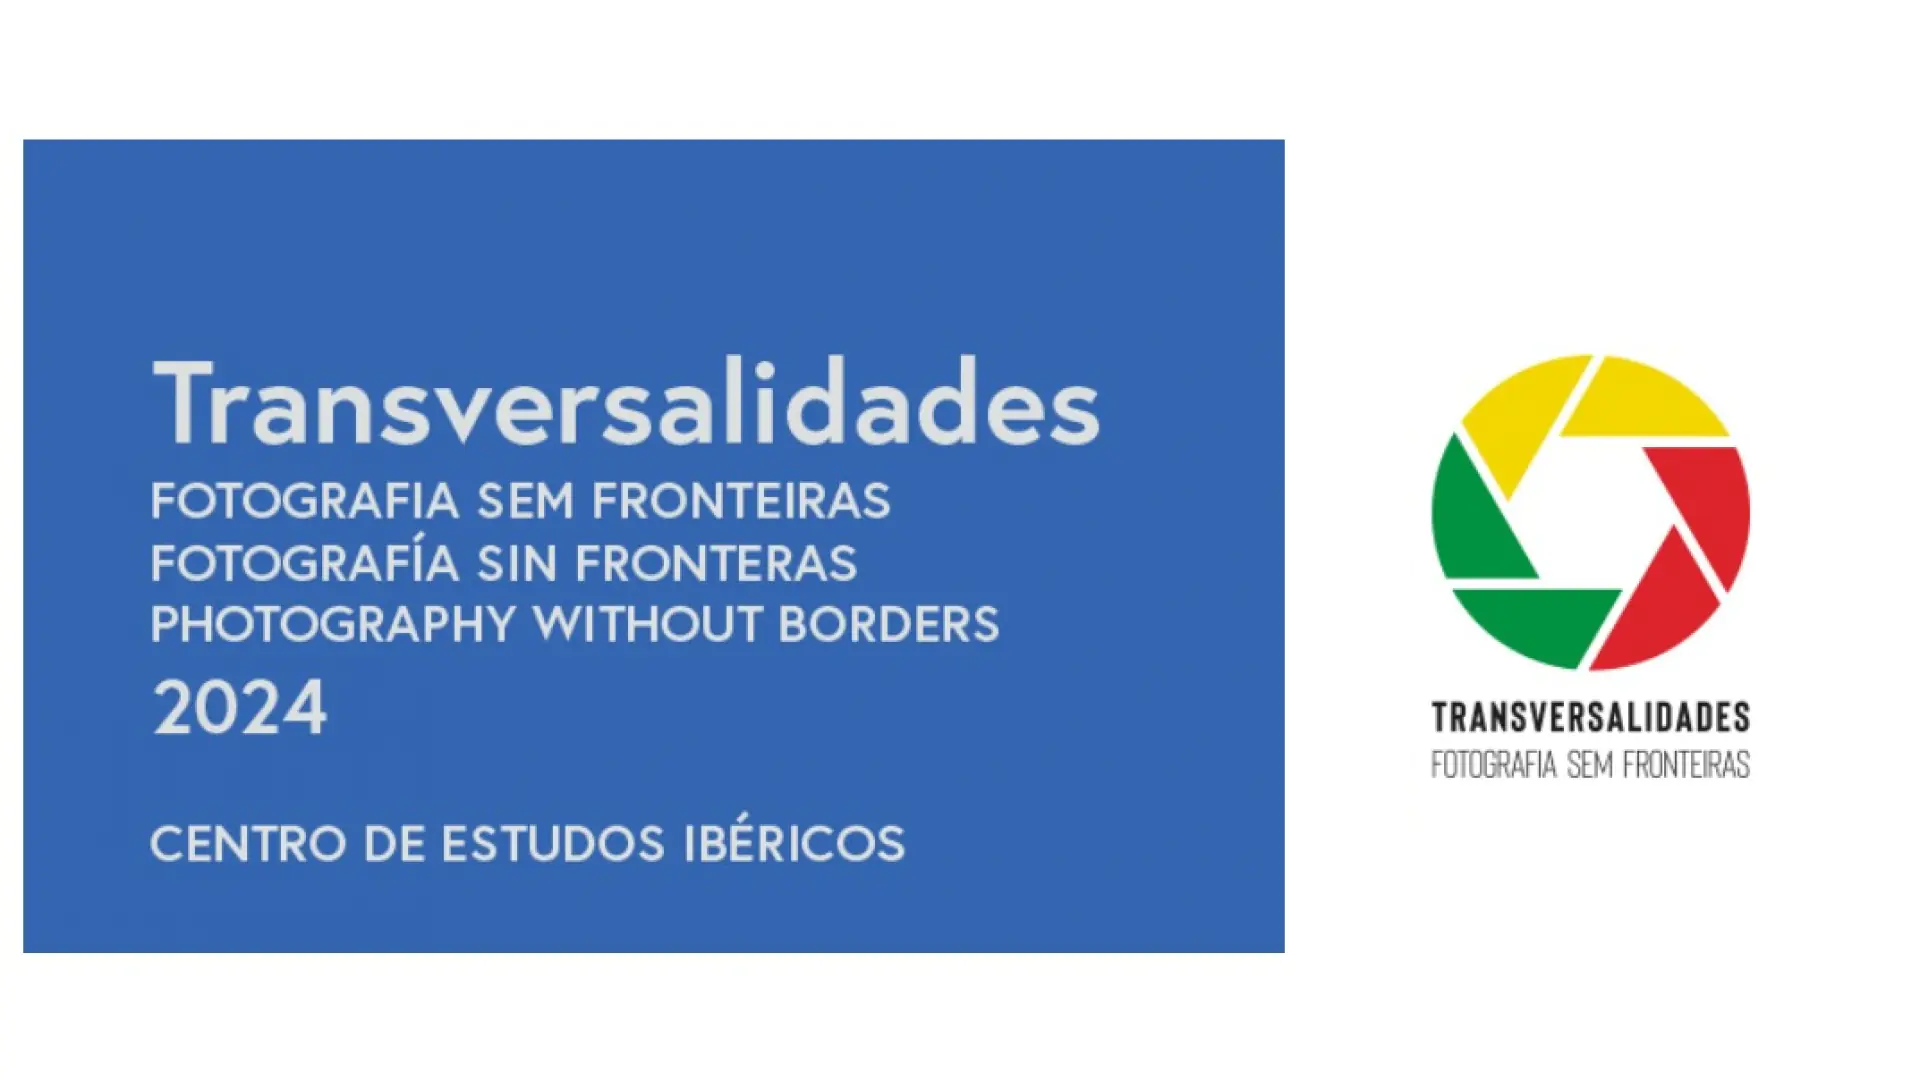 Transversalidades: Photography without frontiers 2024 — barcha uchun xalqaro foto tanlov; umumiy mukofot jamgʻarmasi €6,300